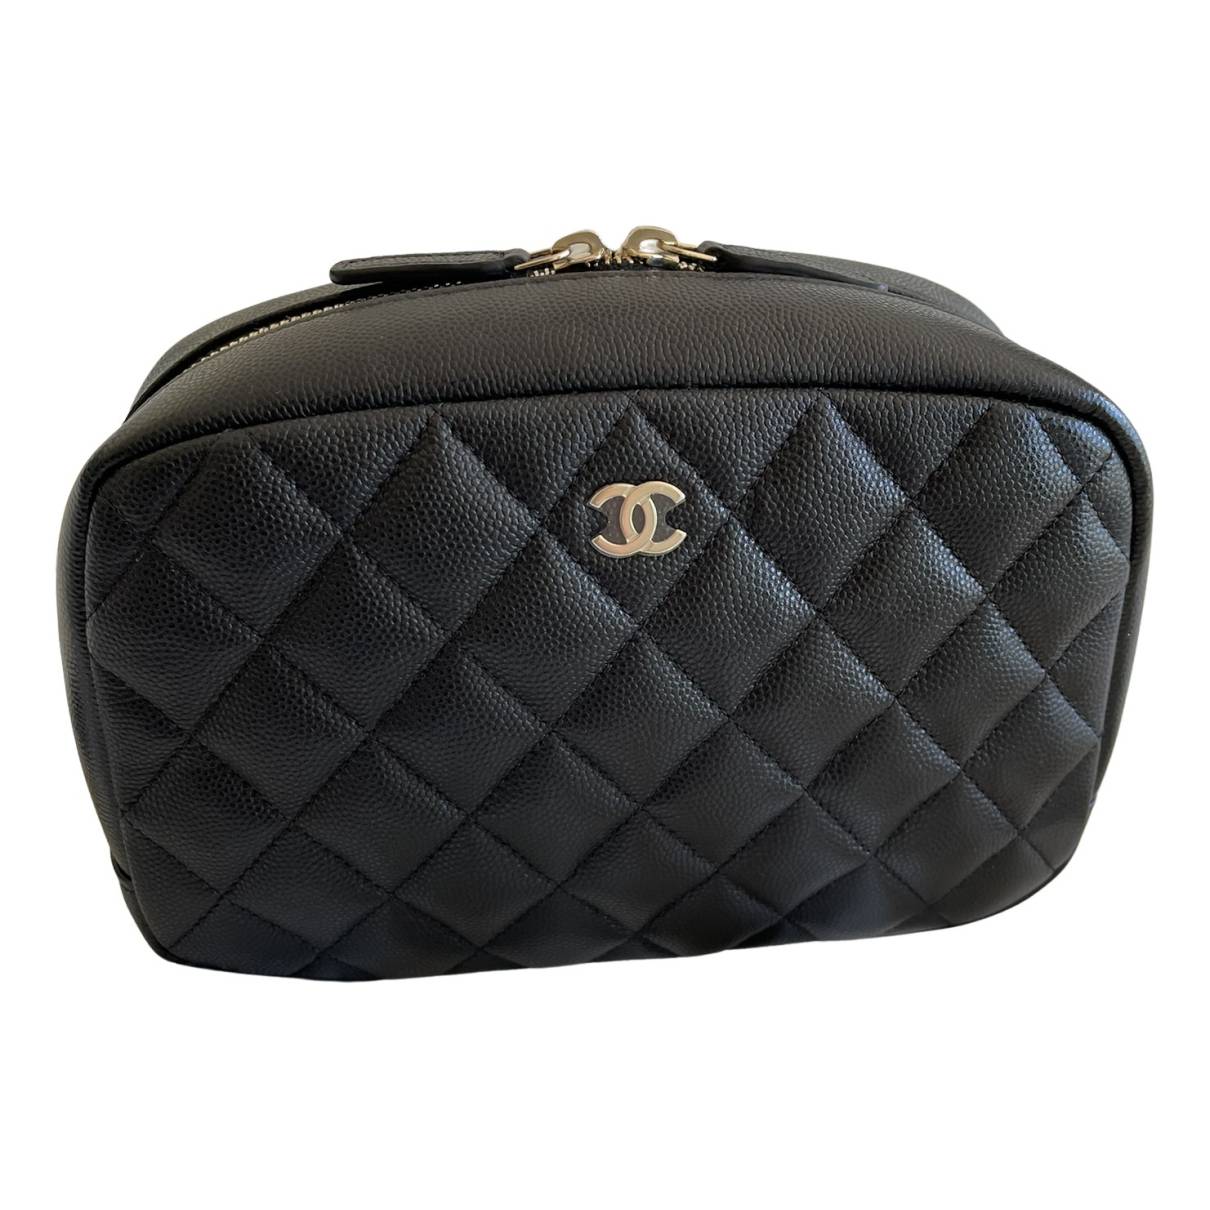 Chanel Black Leather CC Vanity Case Chanel